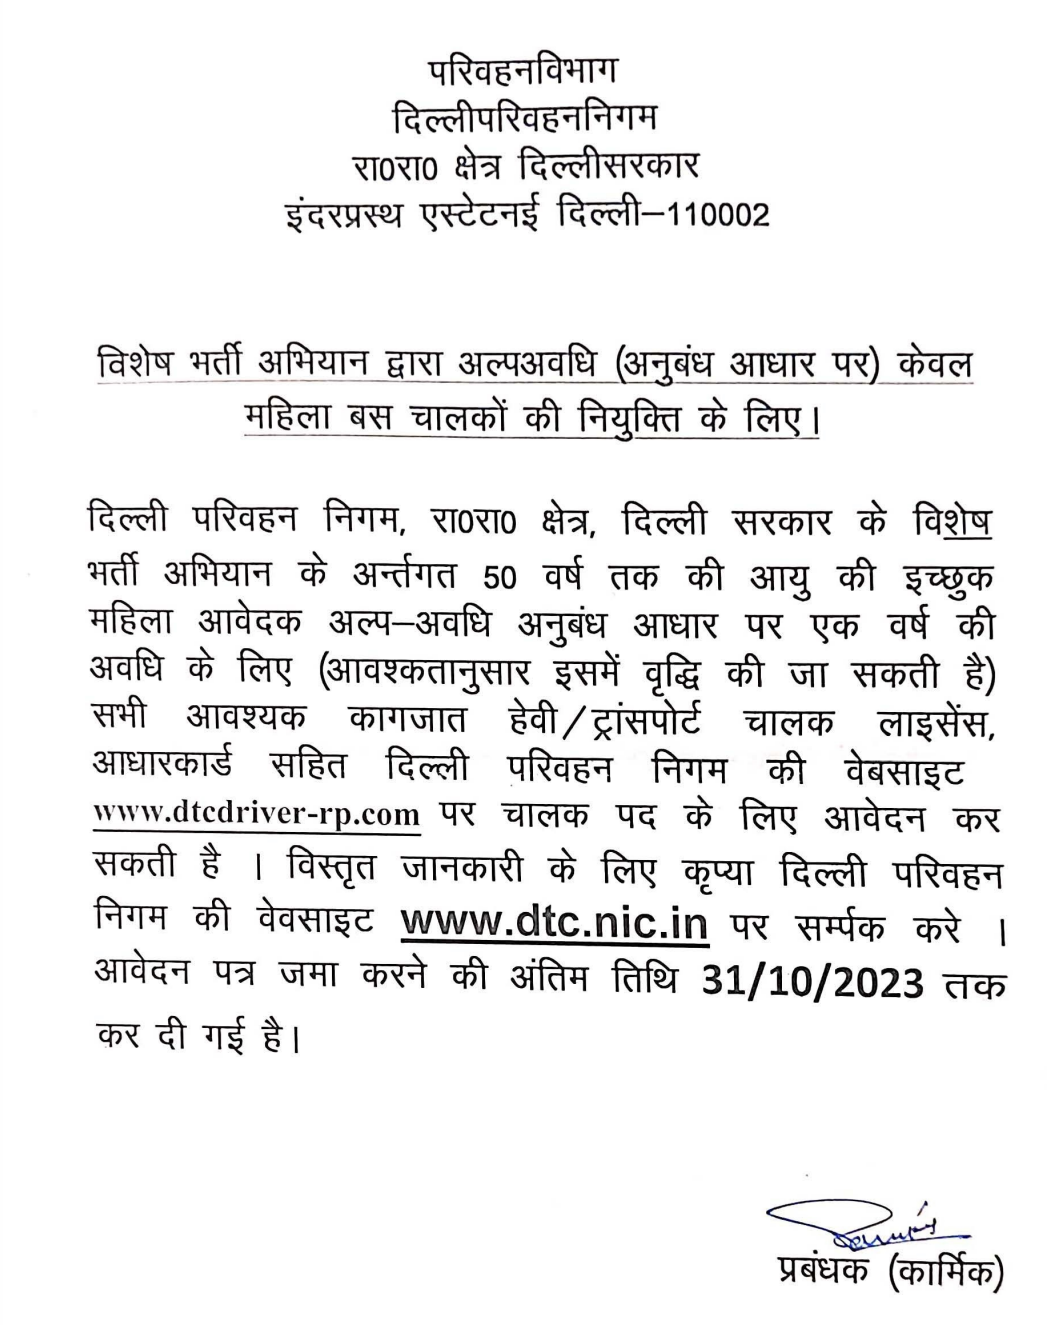 DTC Vacancy Notification